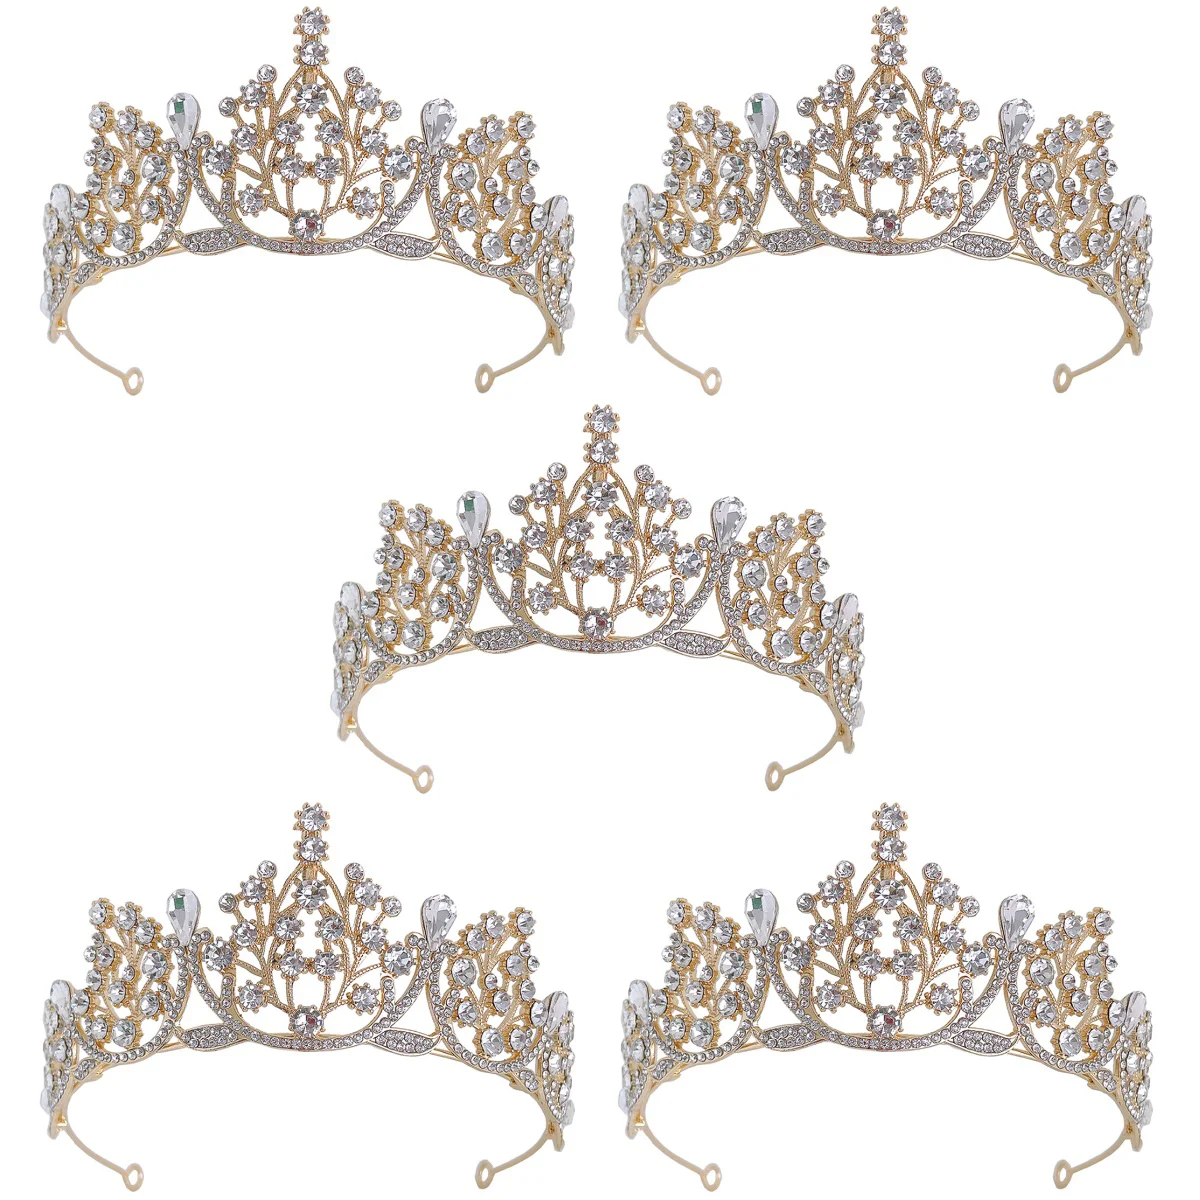 

5 Count Tiara Birthday Crown Women Hair Accessories Bride Headpieces Wedding Crowns Princess Headband Brides